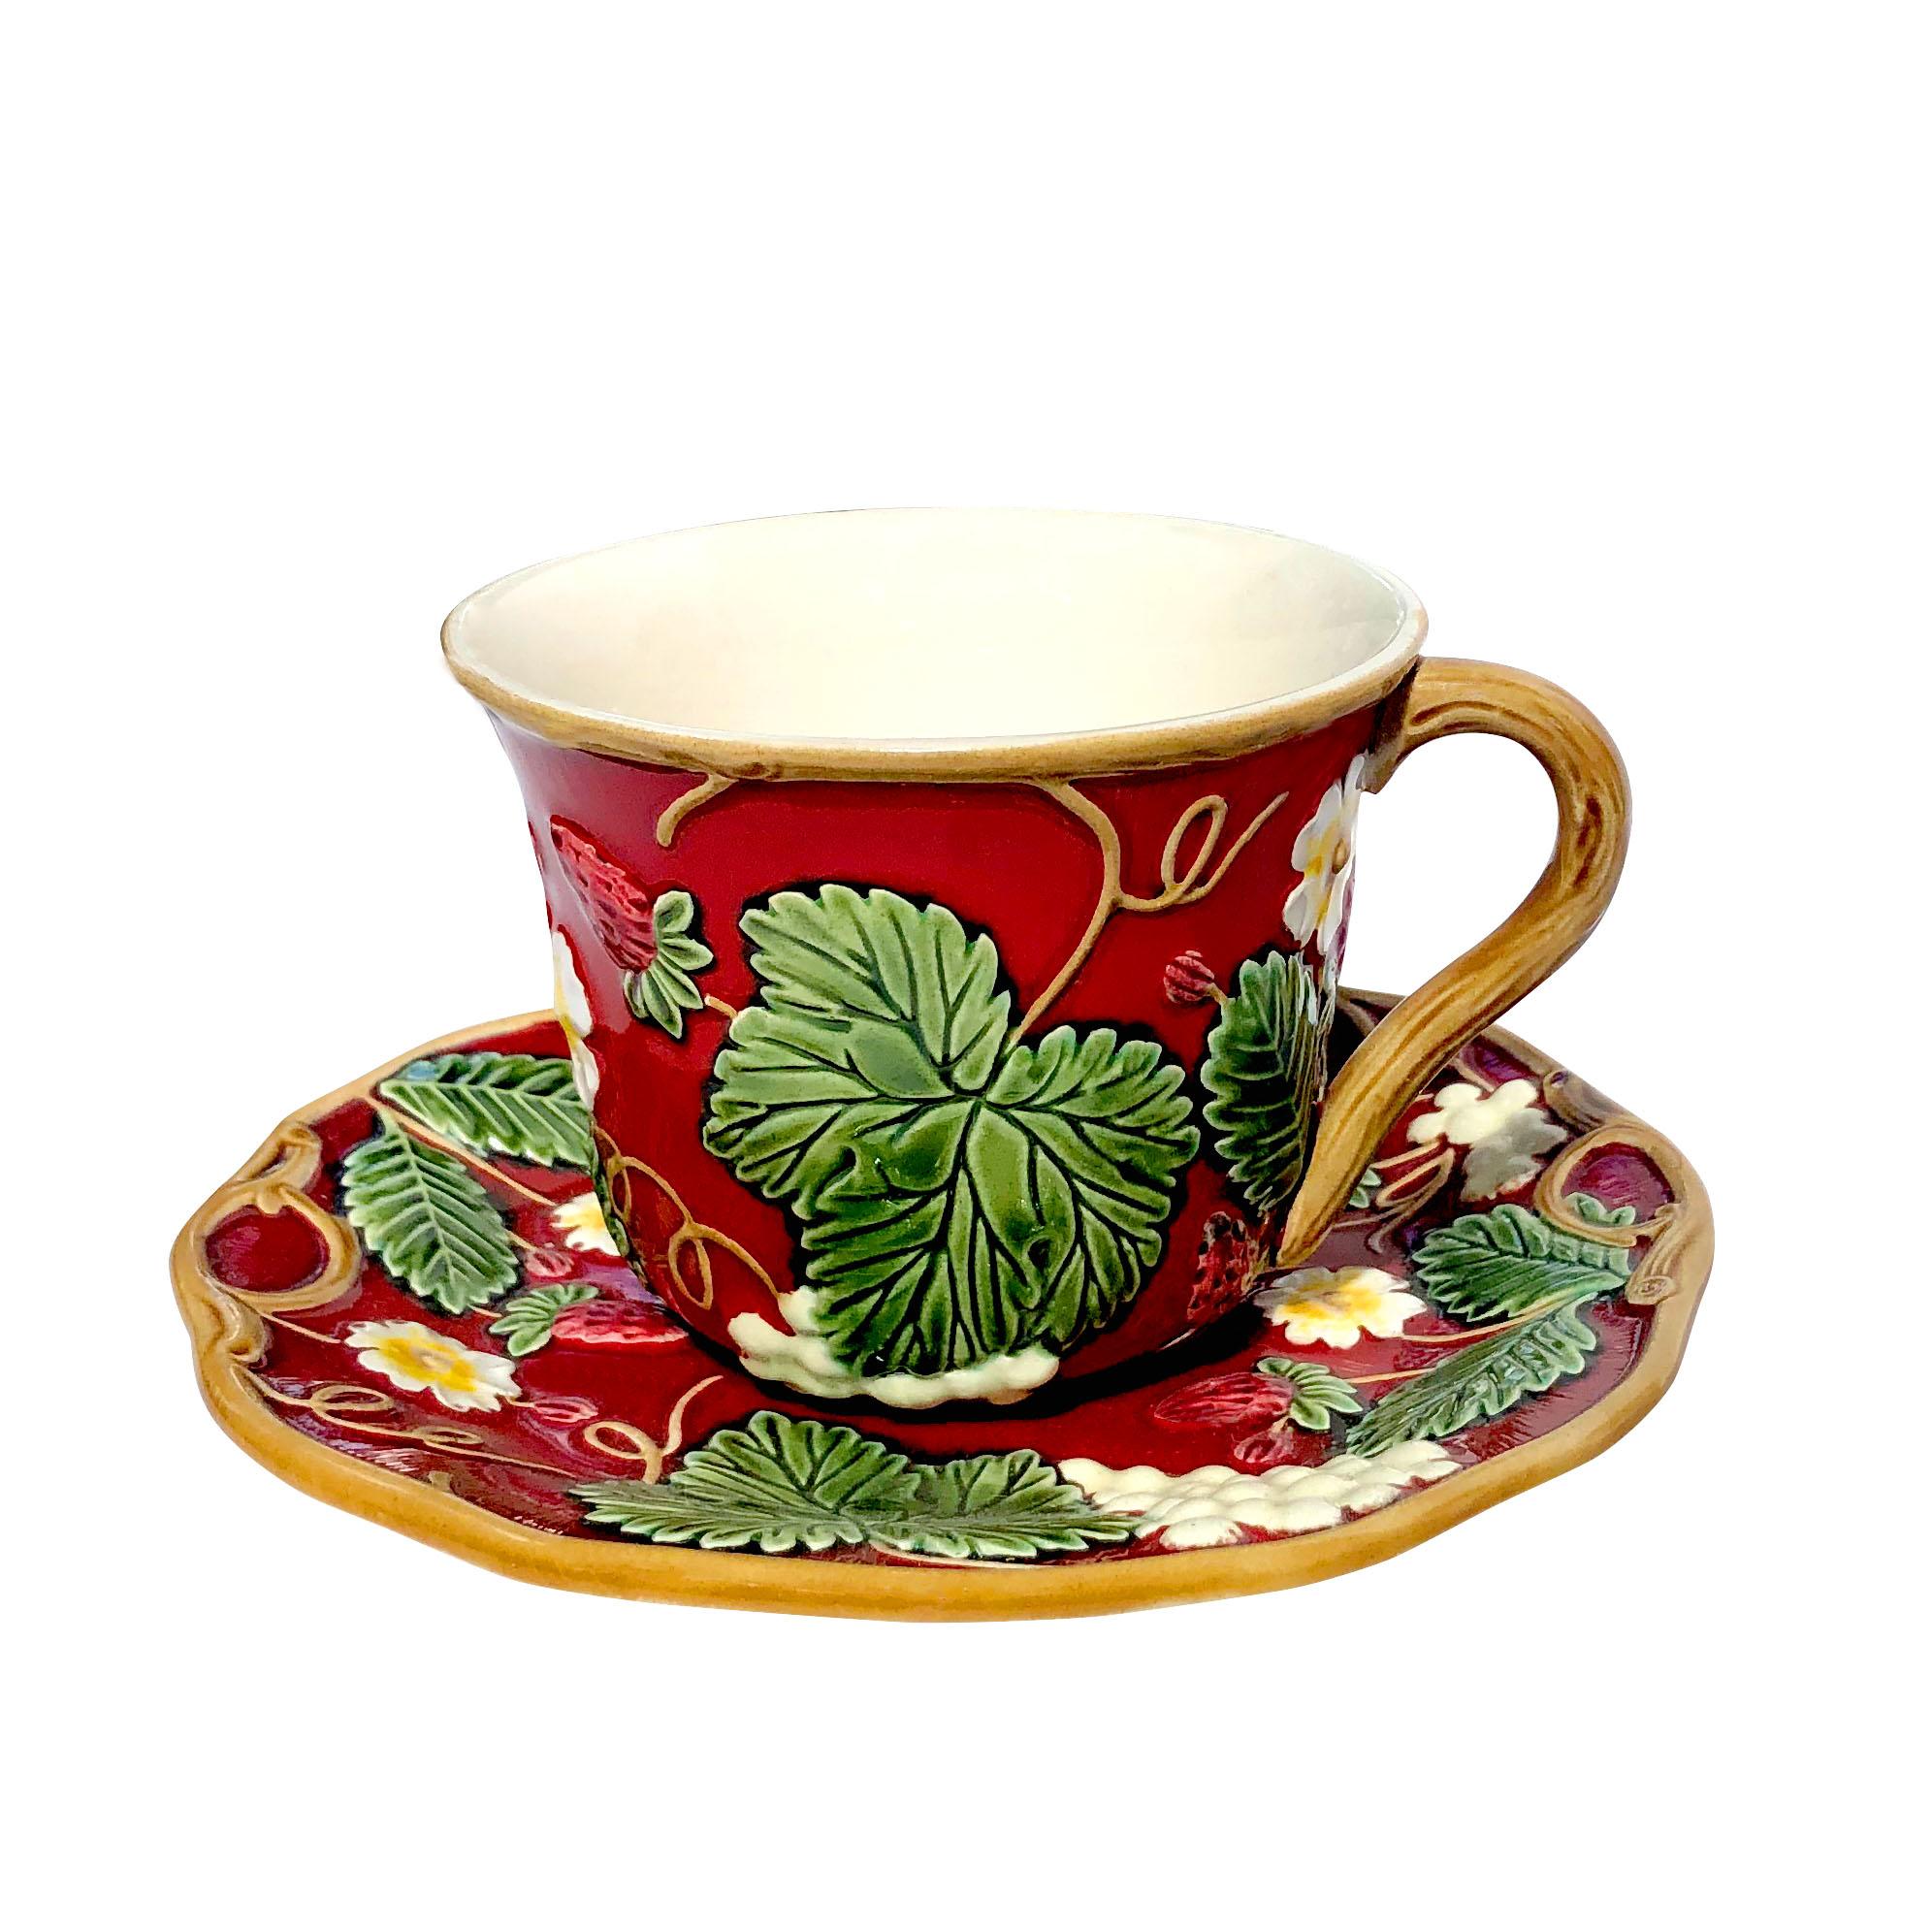 Very original set of 2 earthenware teacups in the 